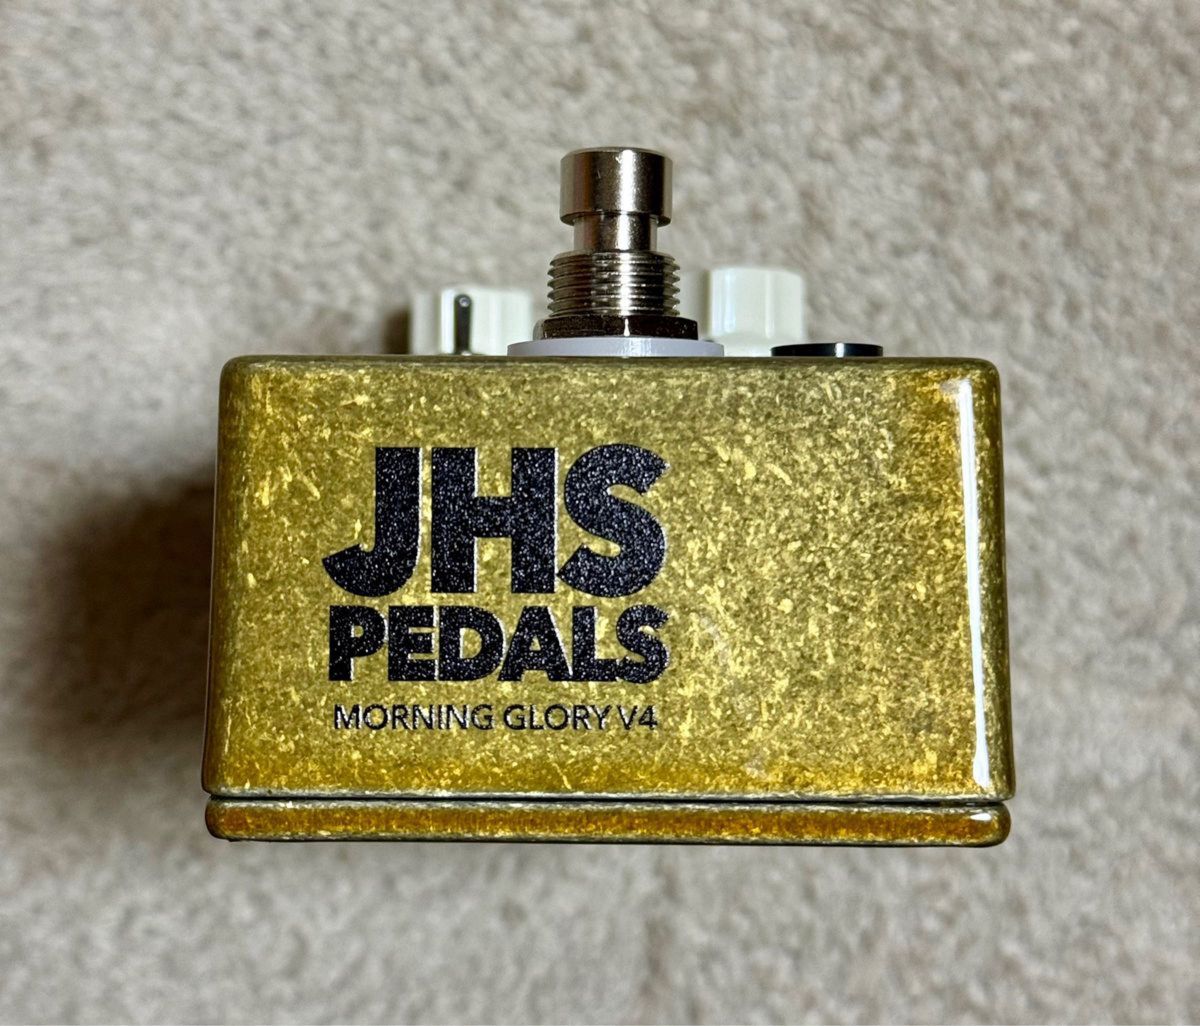 JHS Pedals Morning Glory V4 新品同様 国内正規品 保証付 ギター